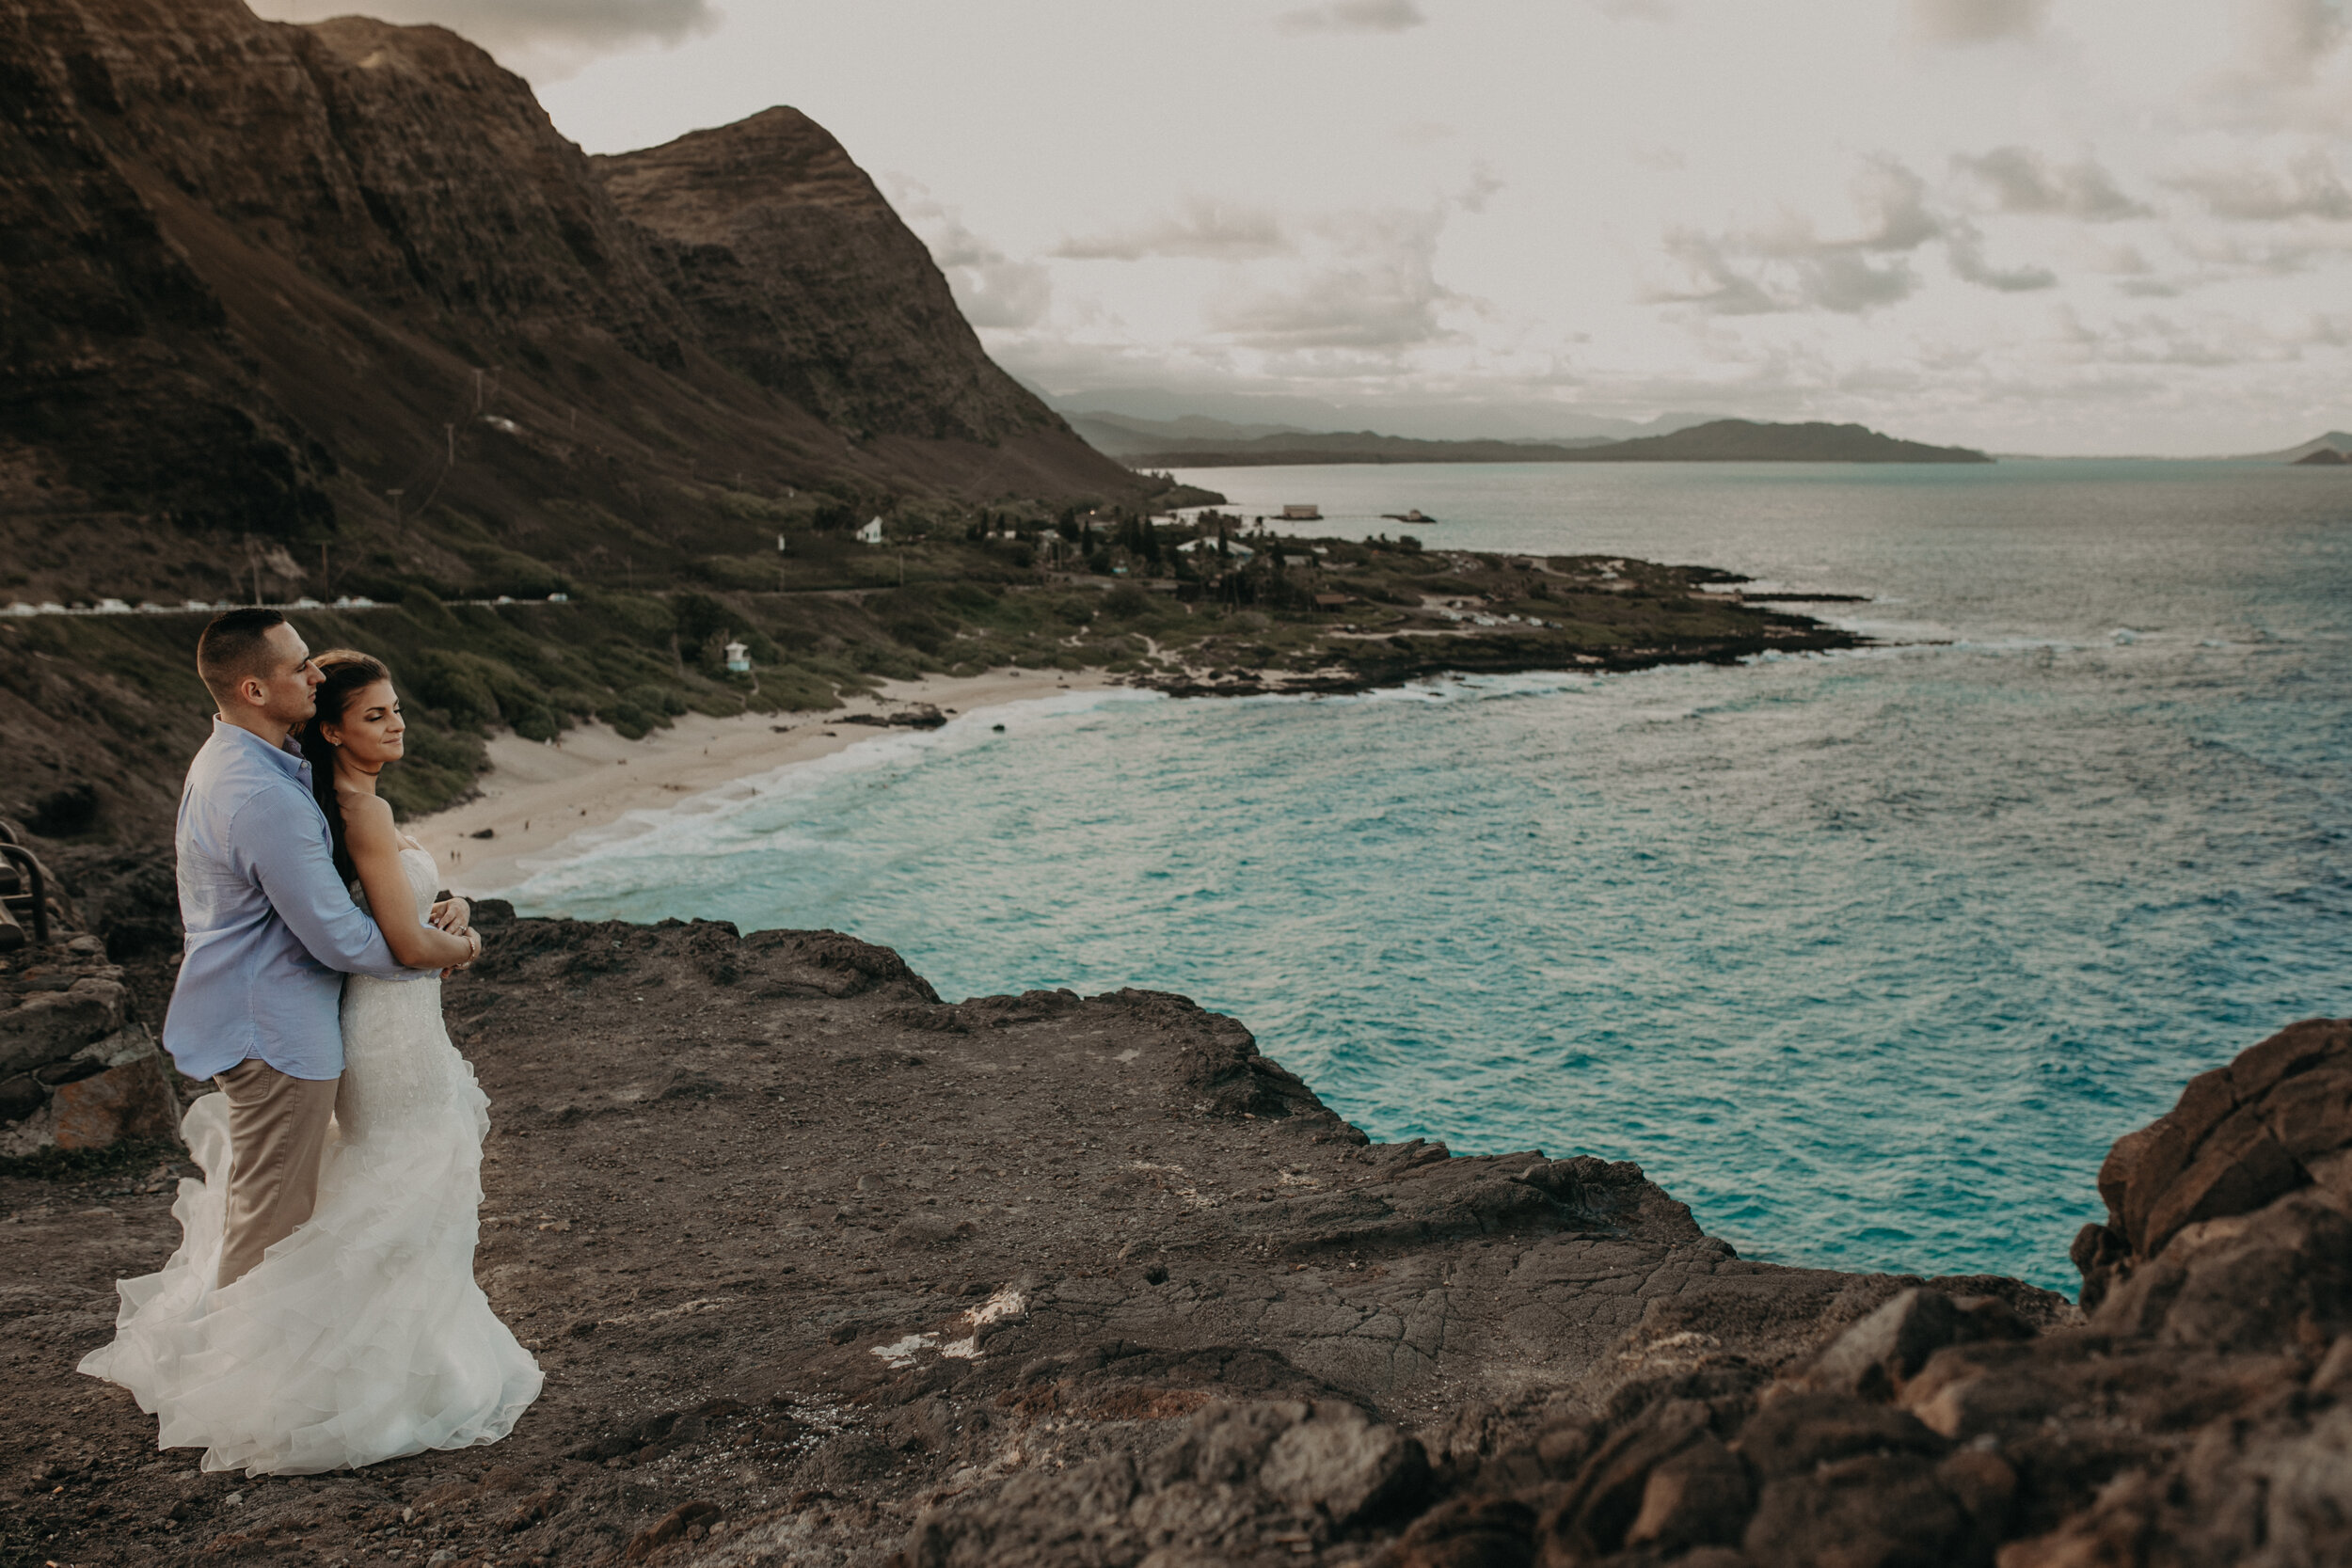  epic elopement and destination wedding location Makapuu Lookout on Oahu Hawaii #elopetohawaii #hawaiielopement #oahuelopement #oahuweddingphotographer #weddingdestinations #hawaiiweddingphotographer #hawaiielopementphotographer #makapuulookout #maka